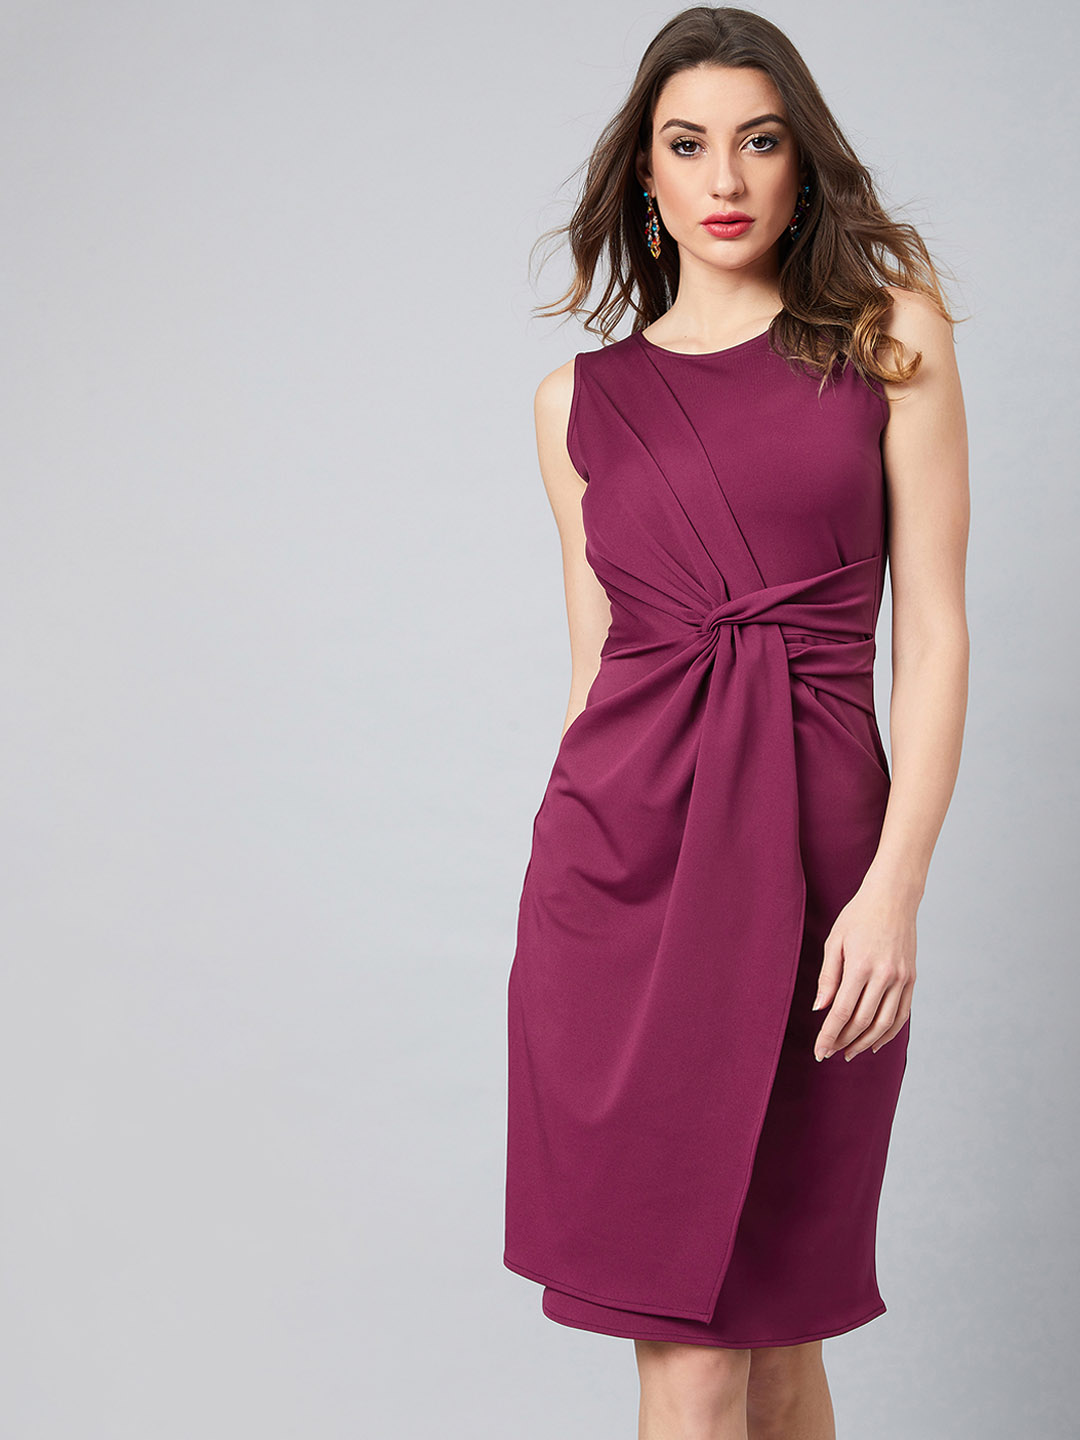 Athena Women Purple Solid Sheath Dress Price in India